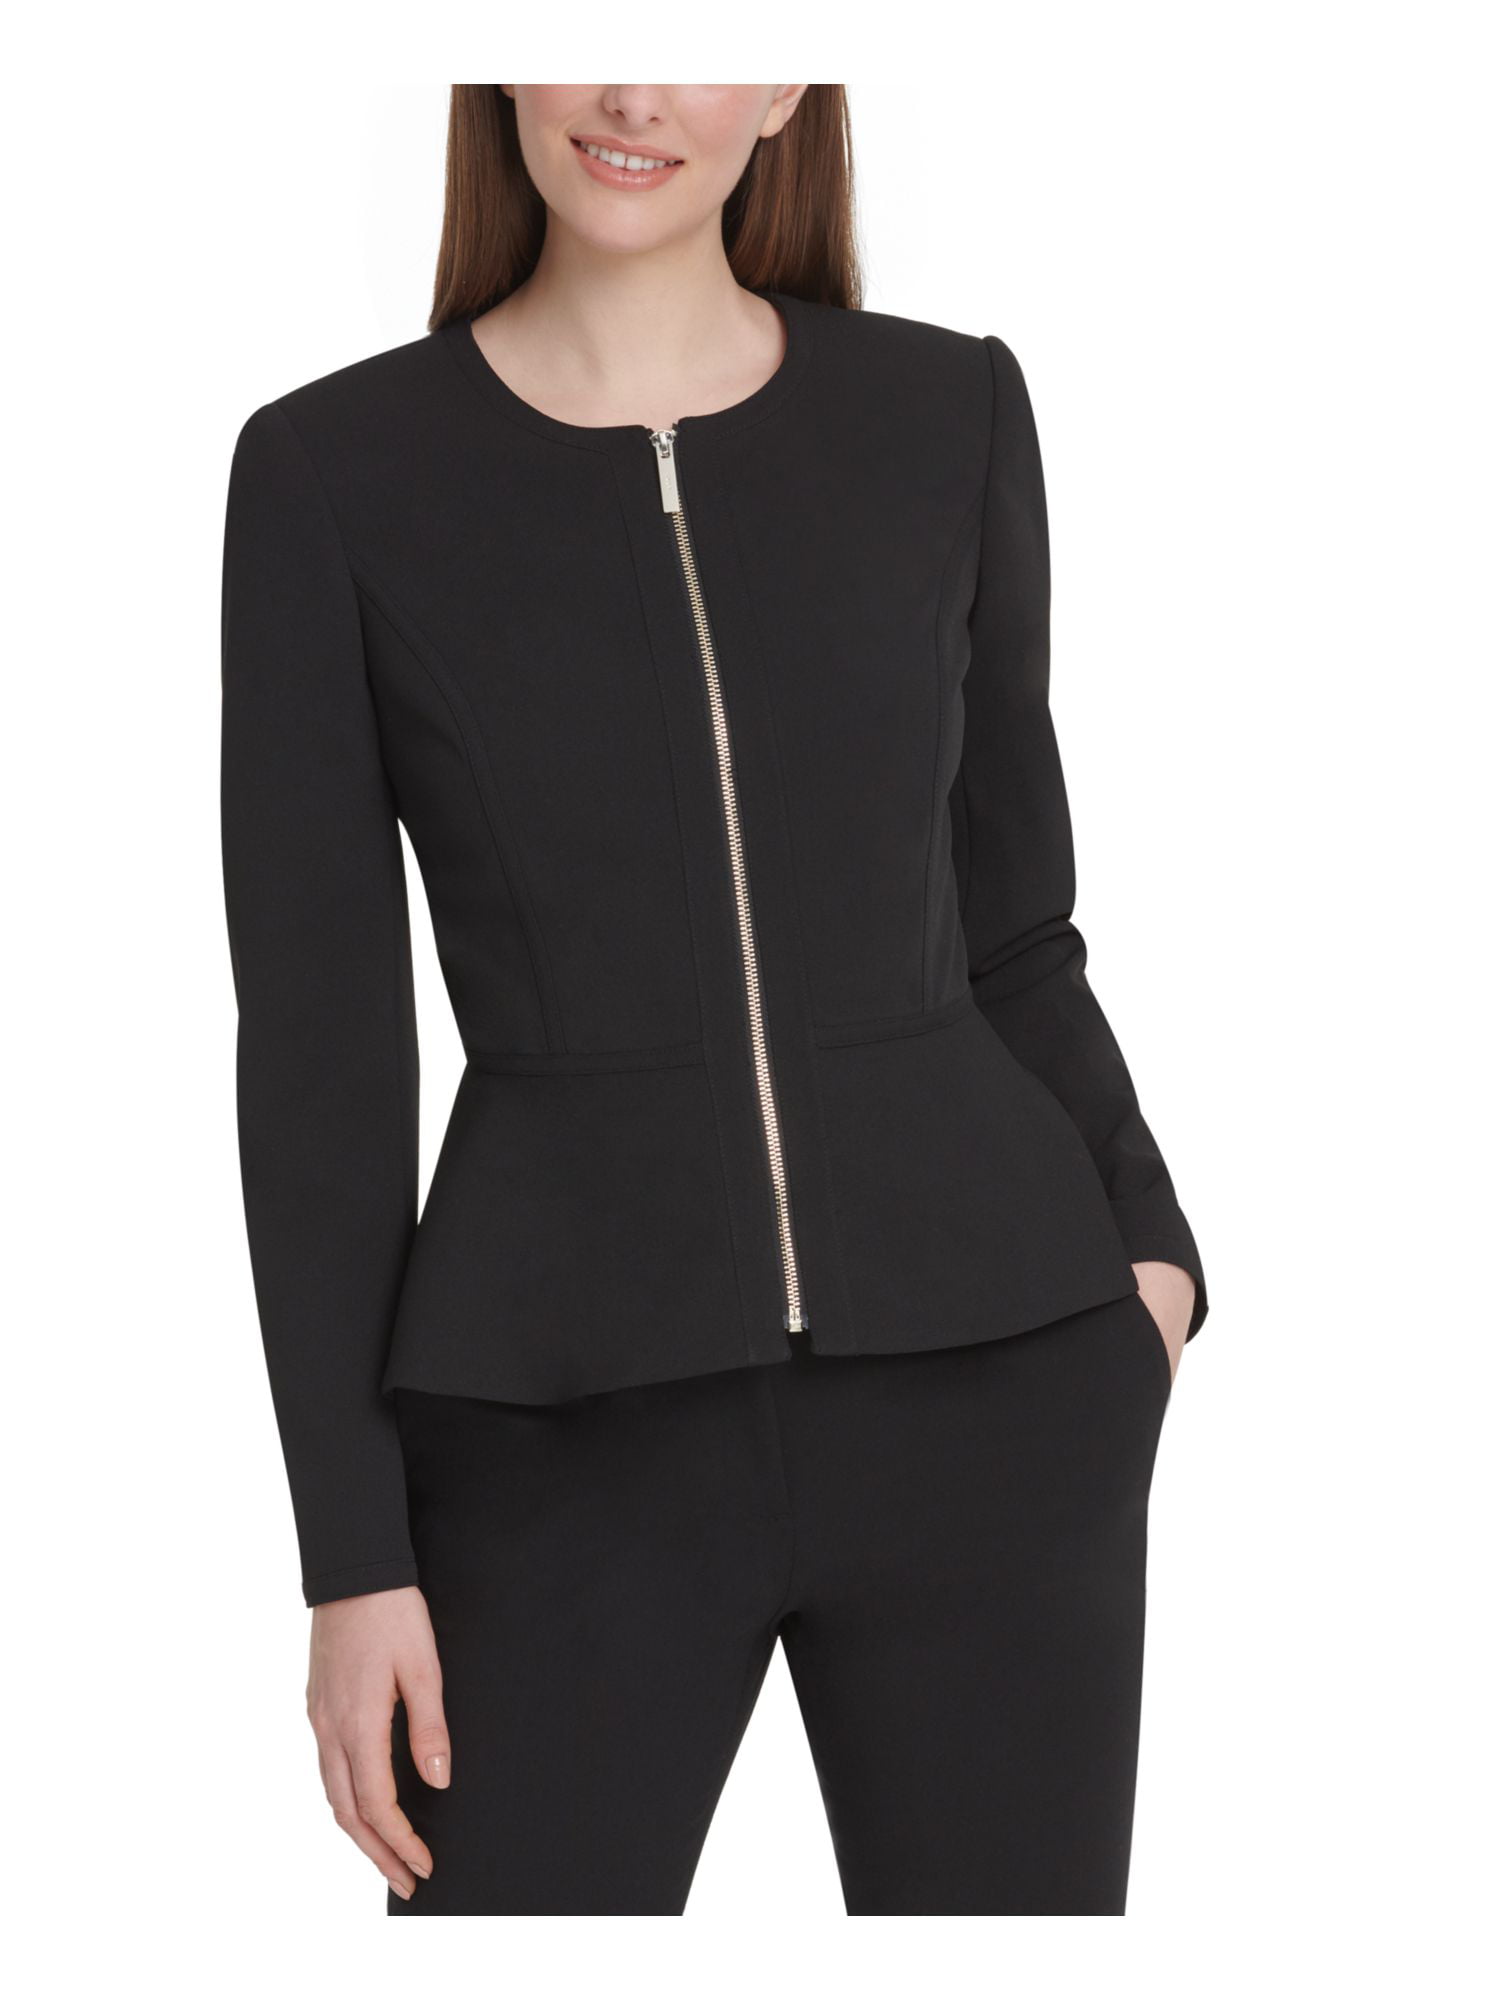 DKNY Womens Zippered Suit Separate Peplum Jacket Black 8 - Walmart.com